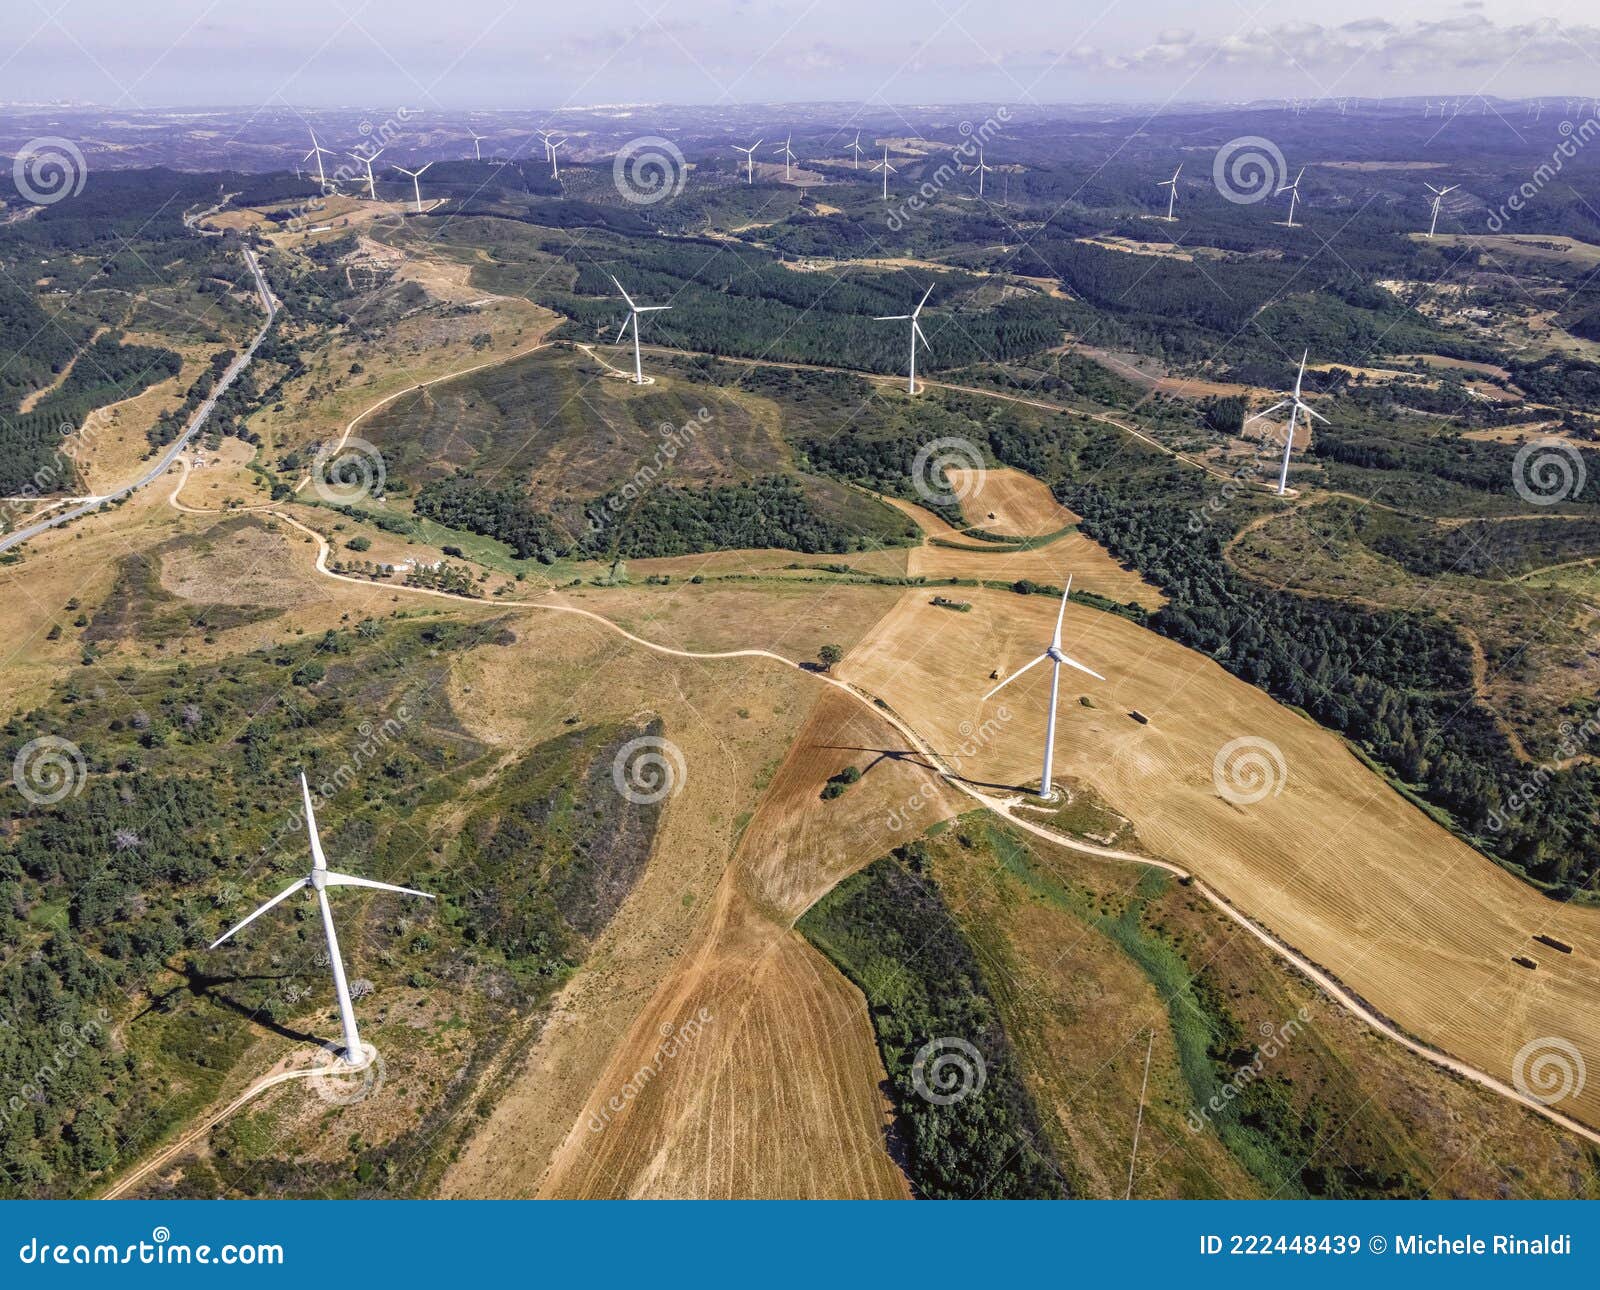 aerial view of a wind turbines in the countryside near monte rubio in faro district, alentejo region, portugal